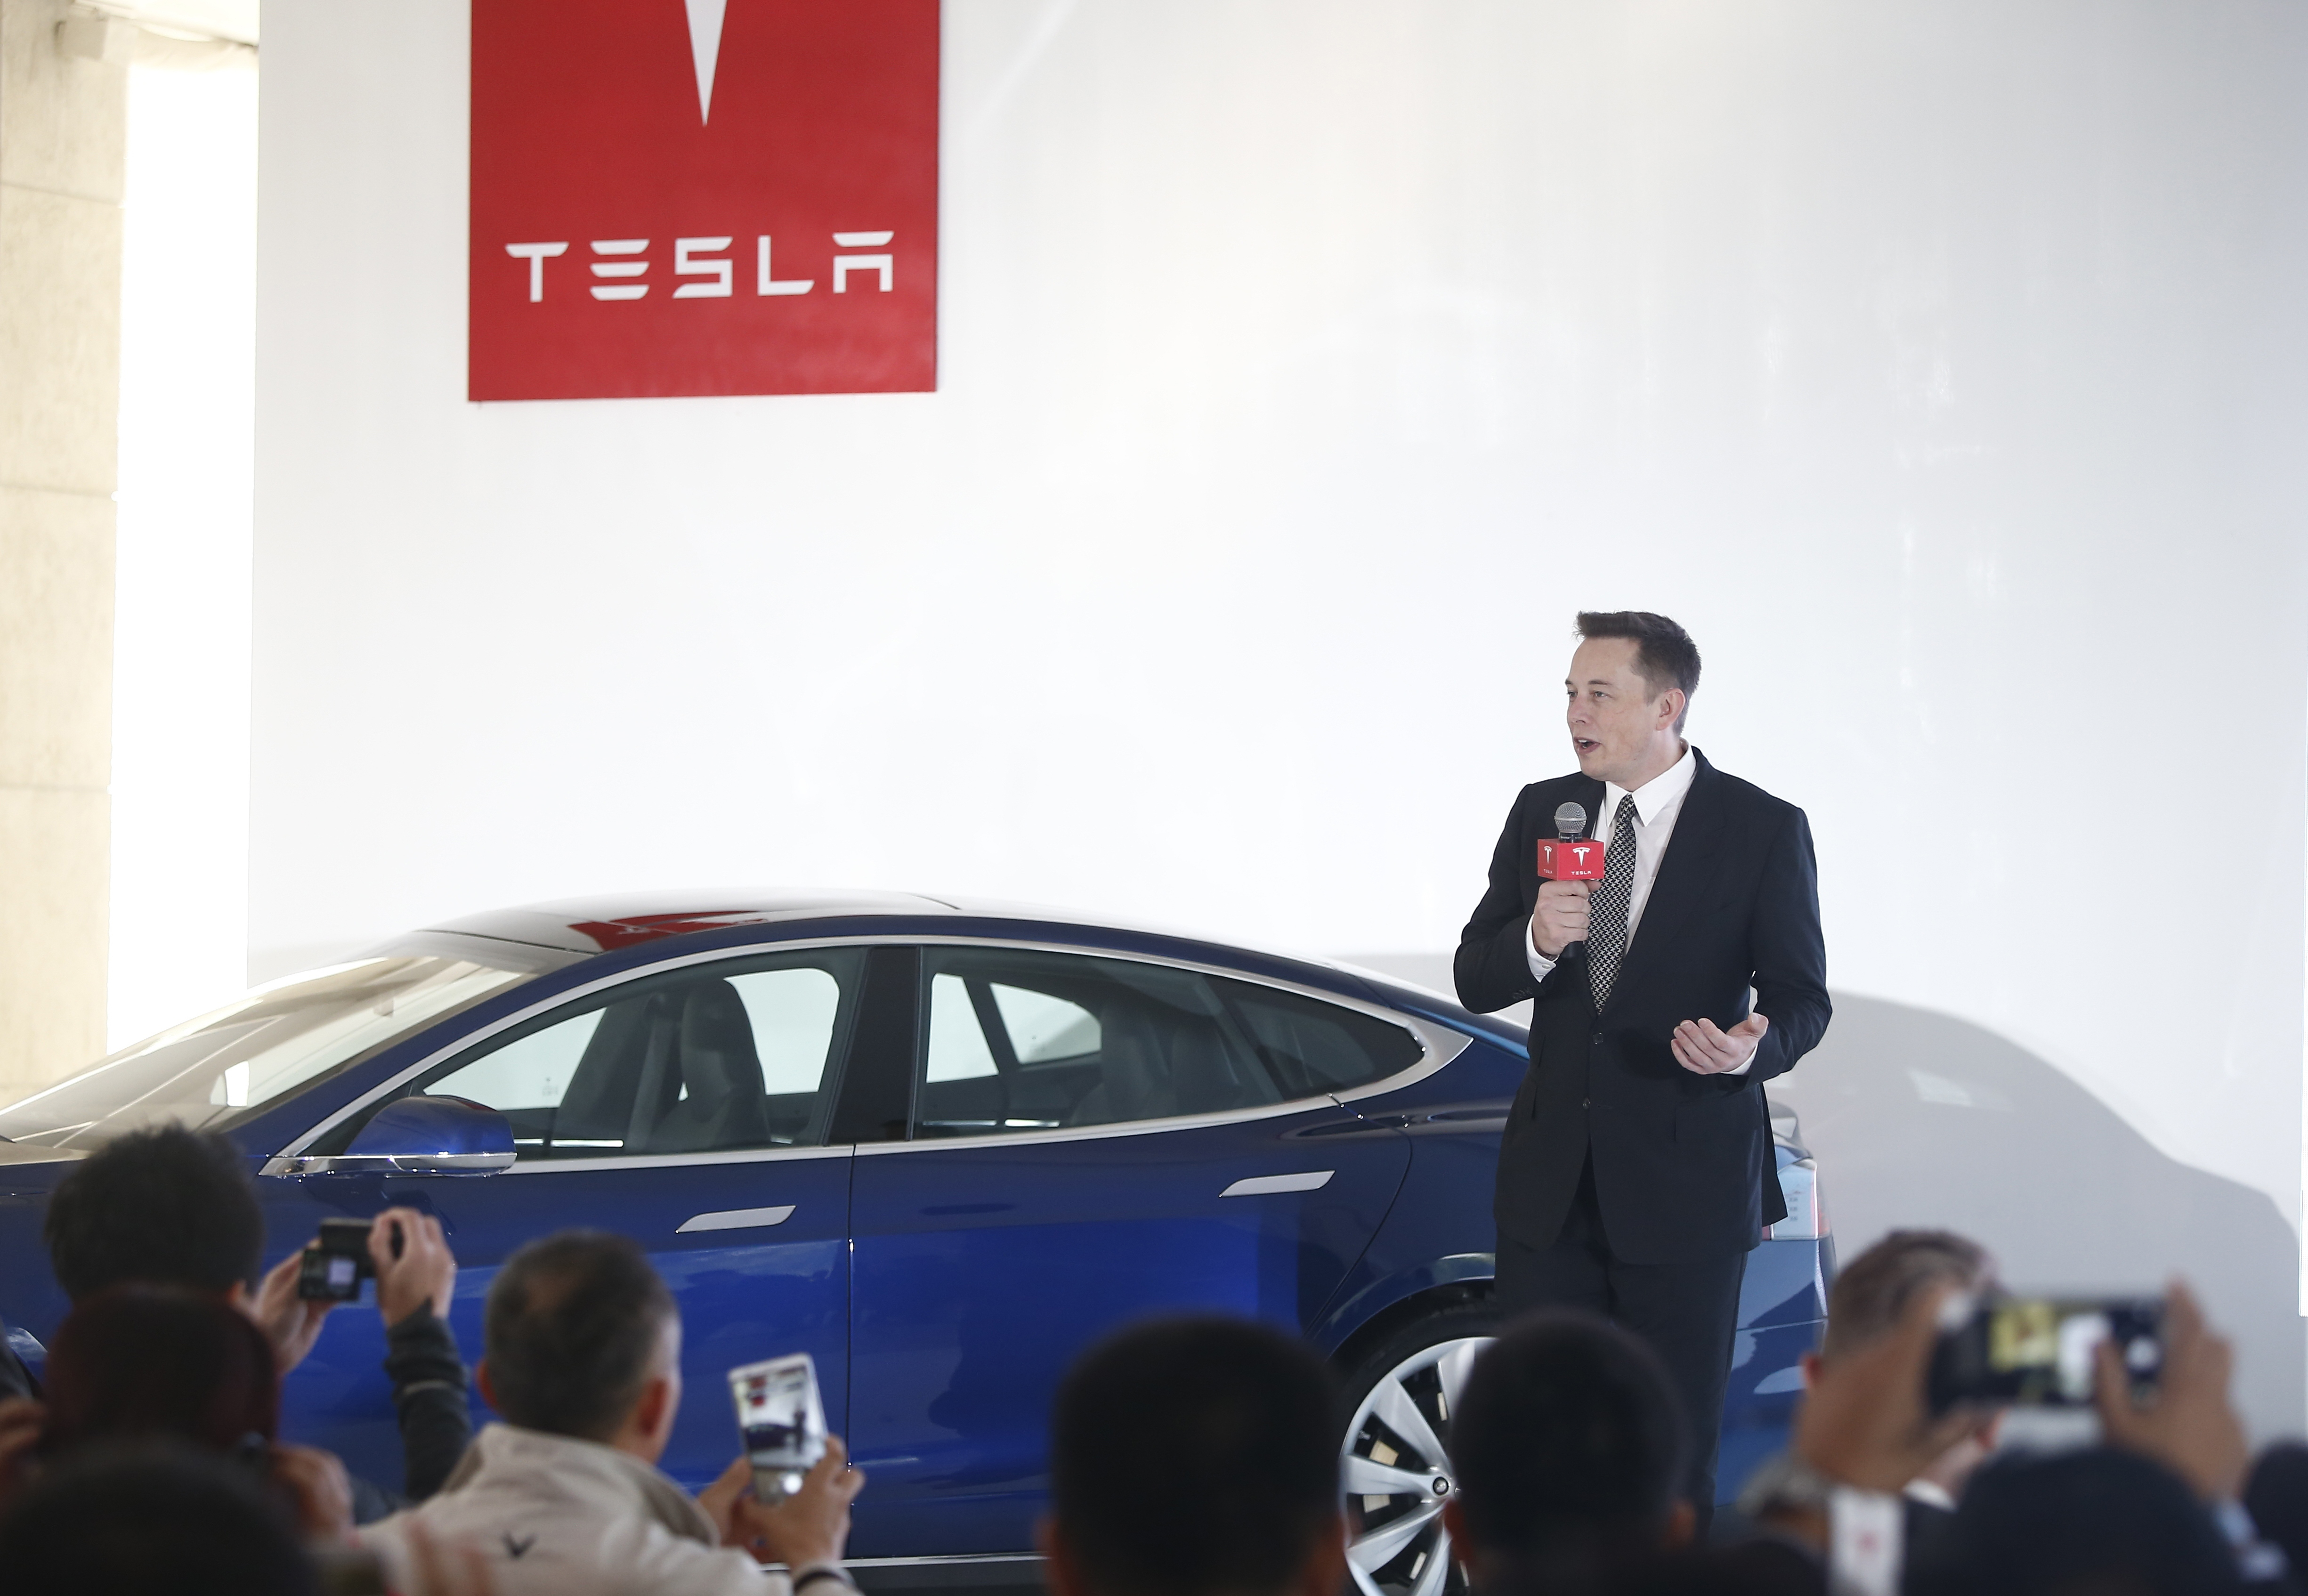 Tesla CEO Elon Musk onstage with a Tesla car